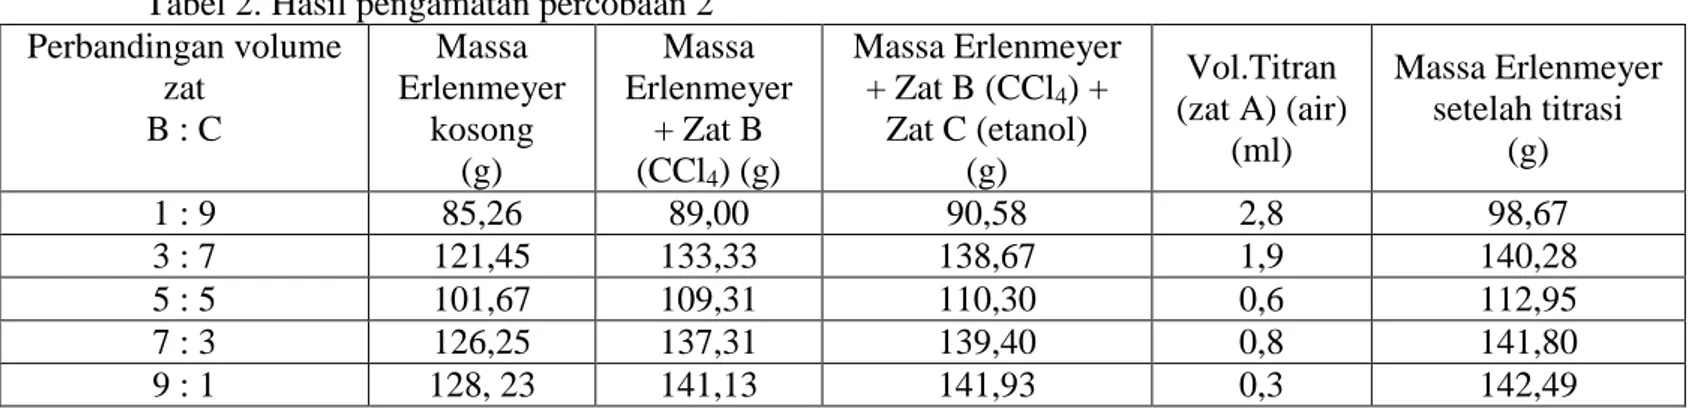 Tabel 2. Hasil pengamatan percobaan 2   Perbandingan volume  zat   B : C  Massa  Erlenmeyer kosong   (g)  Massa  Erlenmeyer + Zat B (CCl 4 ) (g)  Massa Erlenmeyer + Zat B (CCl4) + Zat C (etanol)  (g)  Vol.Titran  (zat A) (air)  (ml)  Massa Erlenmeyer setel